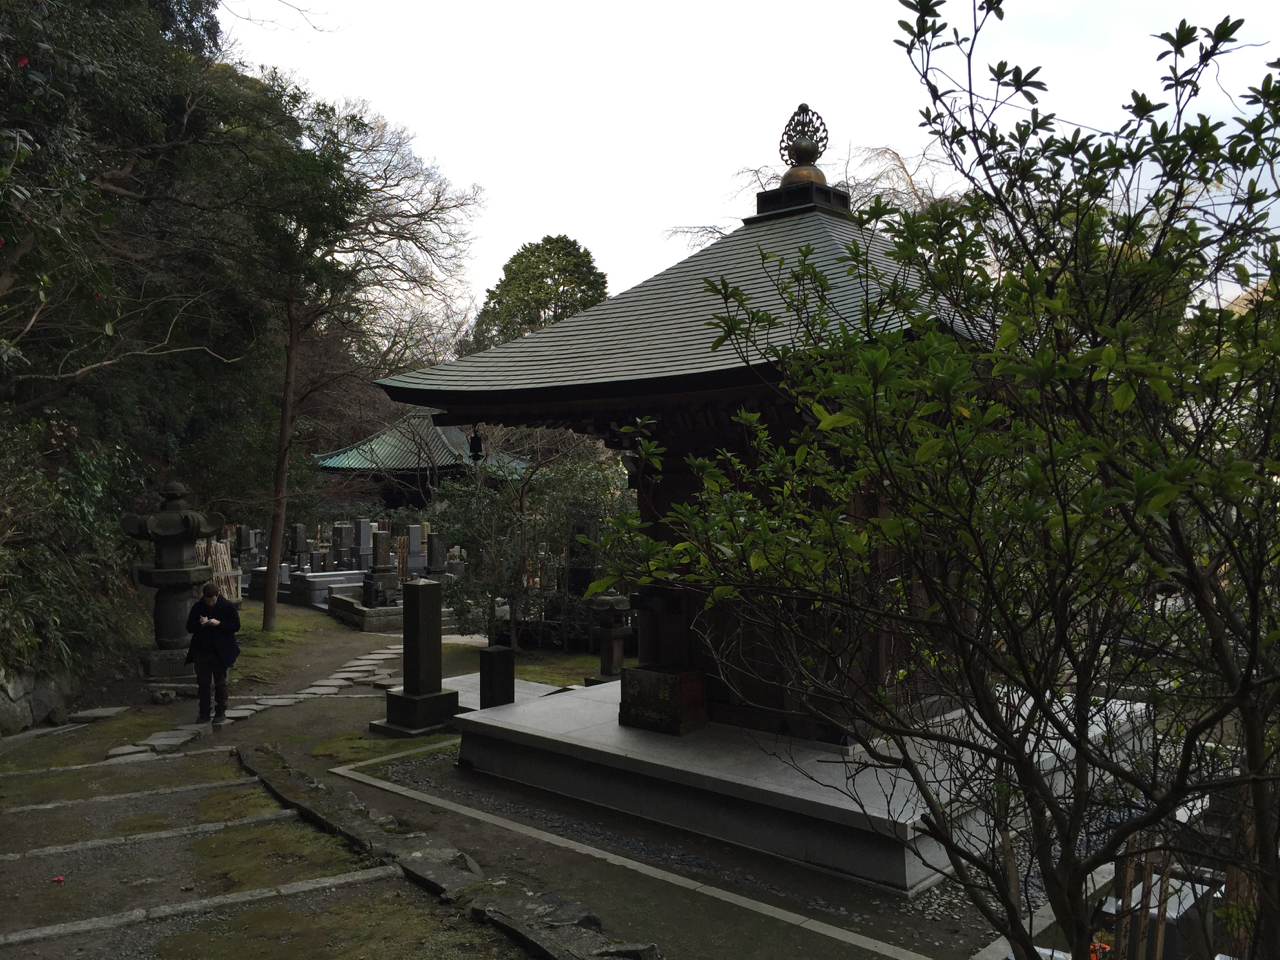 Ankokuron-ji temple, a Kamakura hidden gem with great views